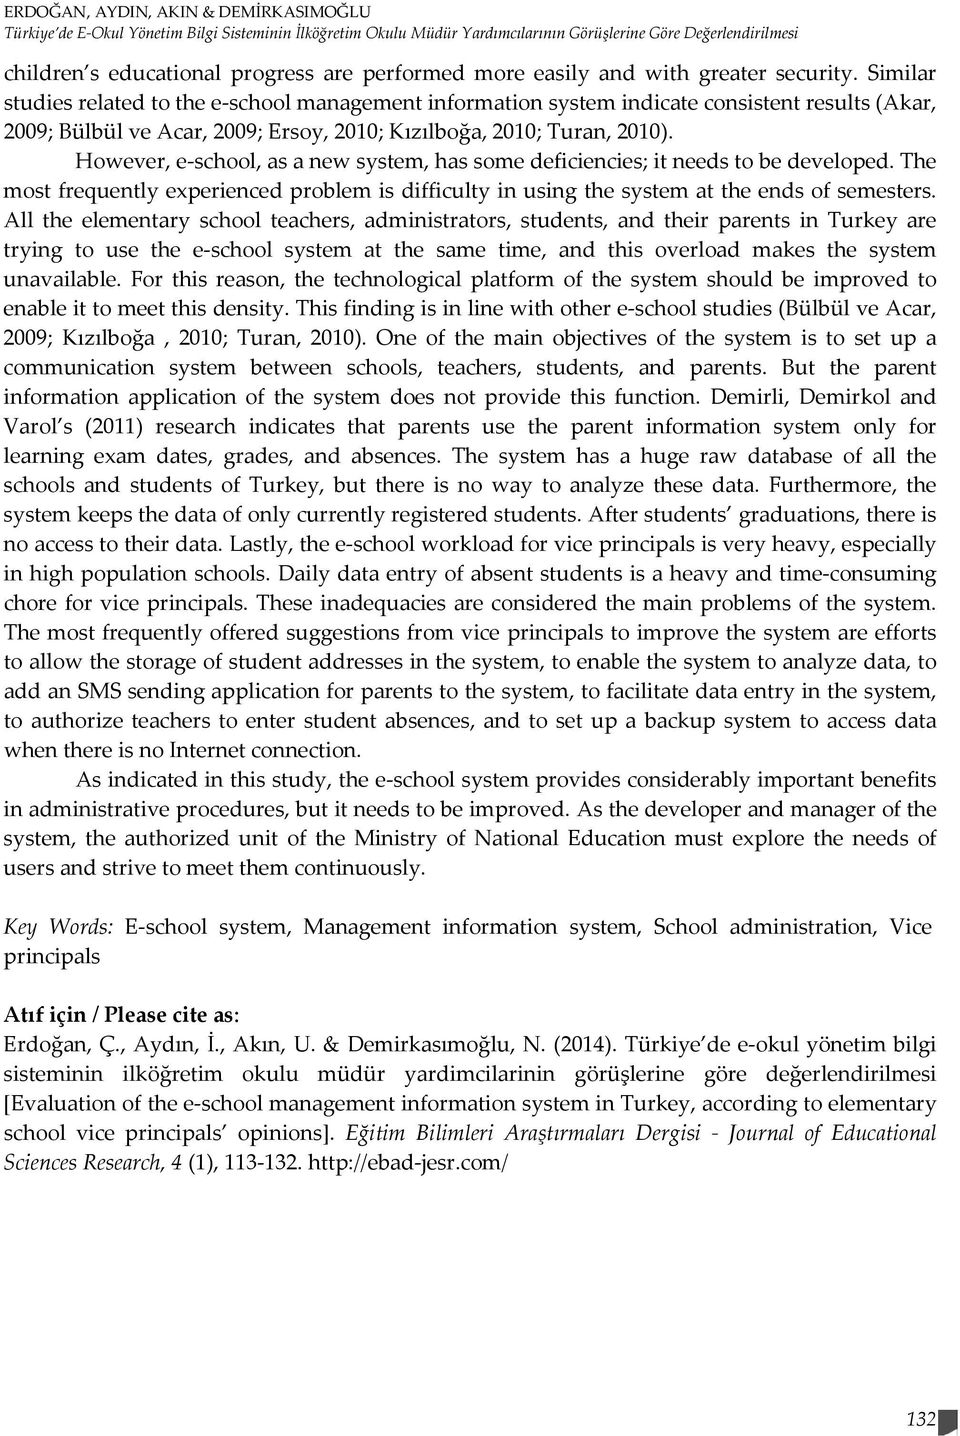 Similar studies related to the e-school management information system indicate consistent results (Akar, 2009; Bülbül ve Acar, 2009; Ersoy, 2010; Kızılboğa, 2010; Turan, 2010).